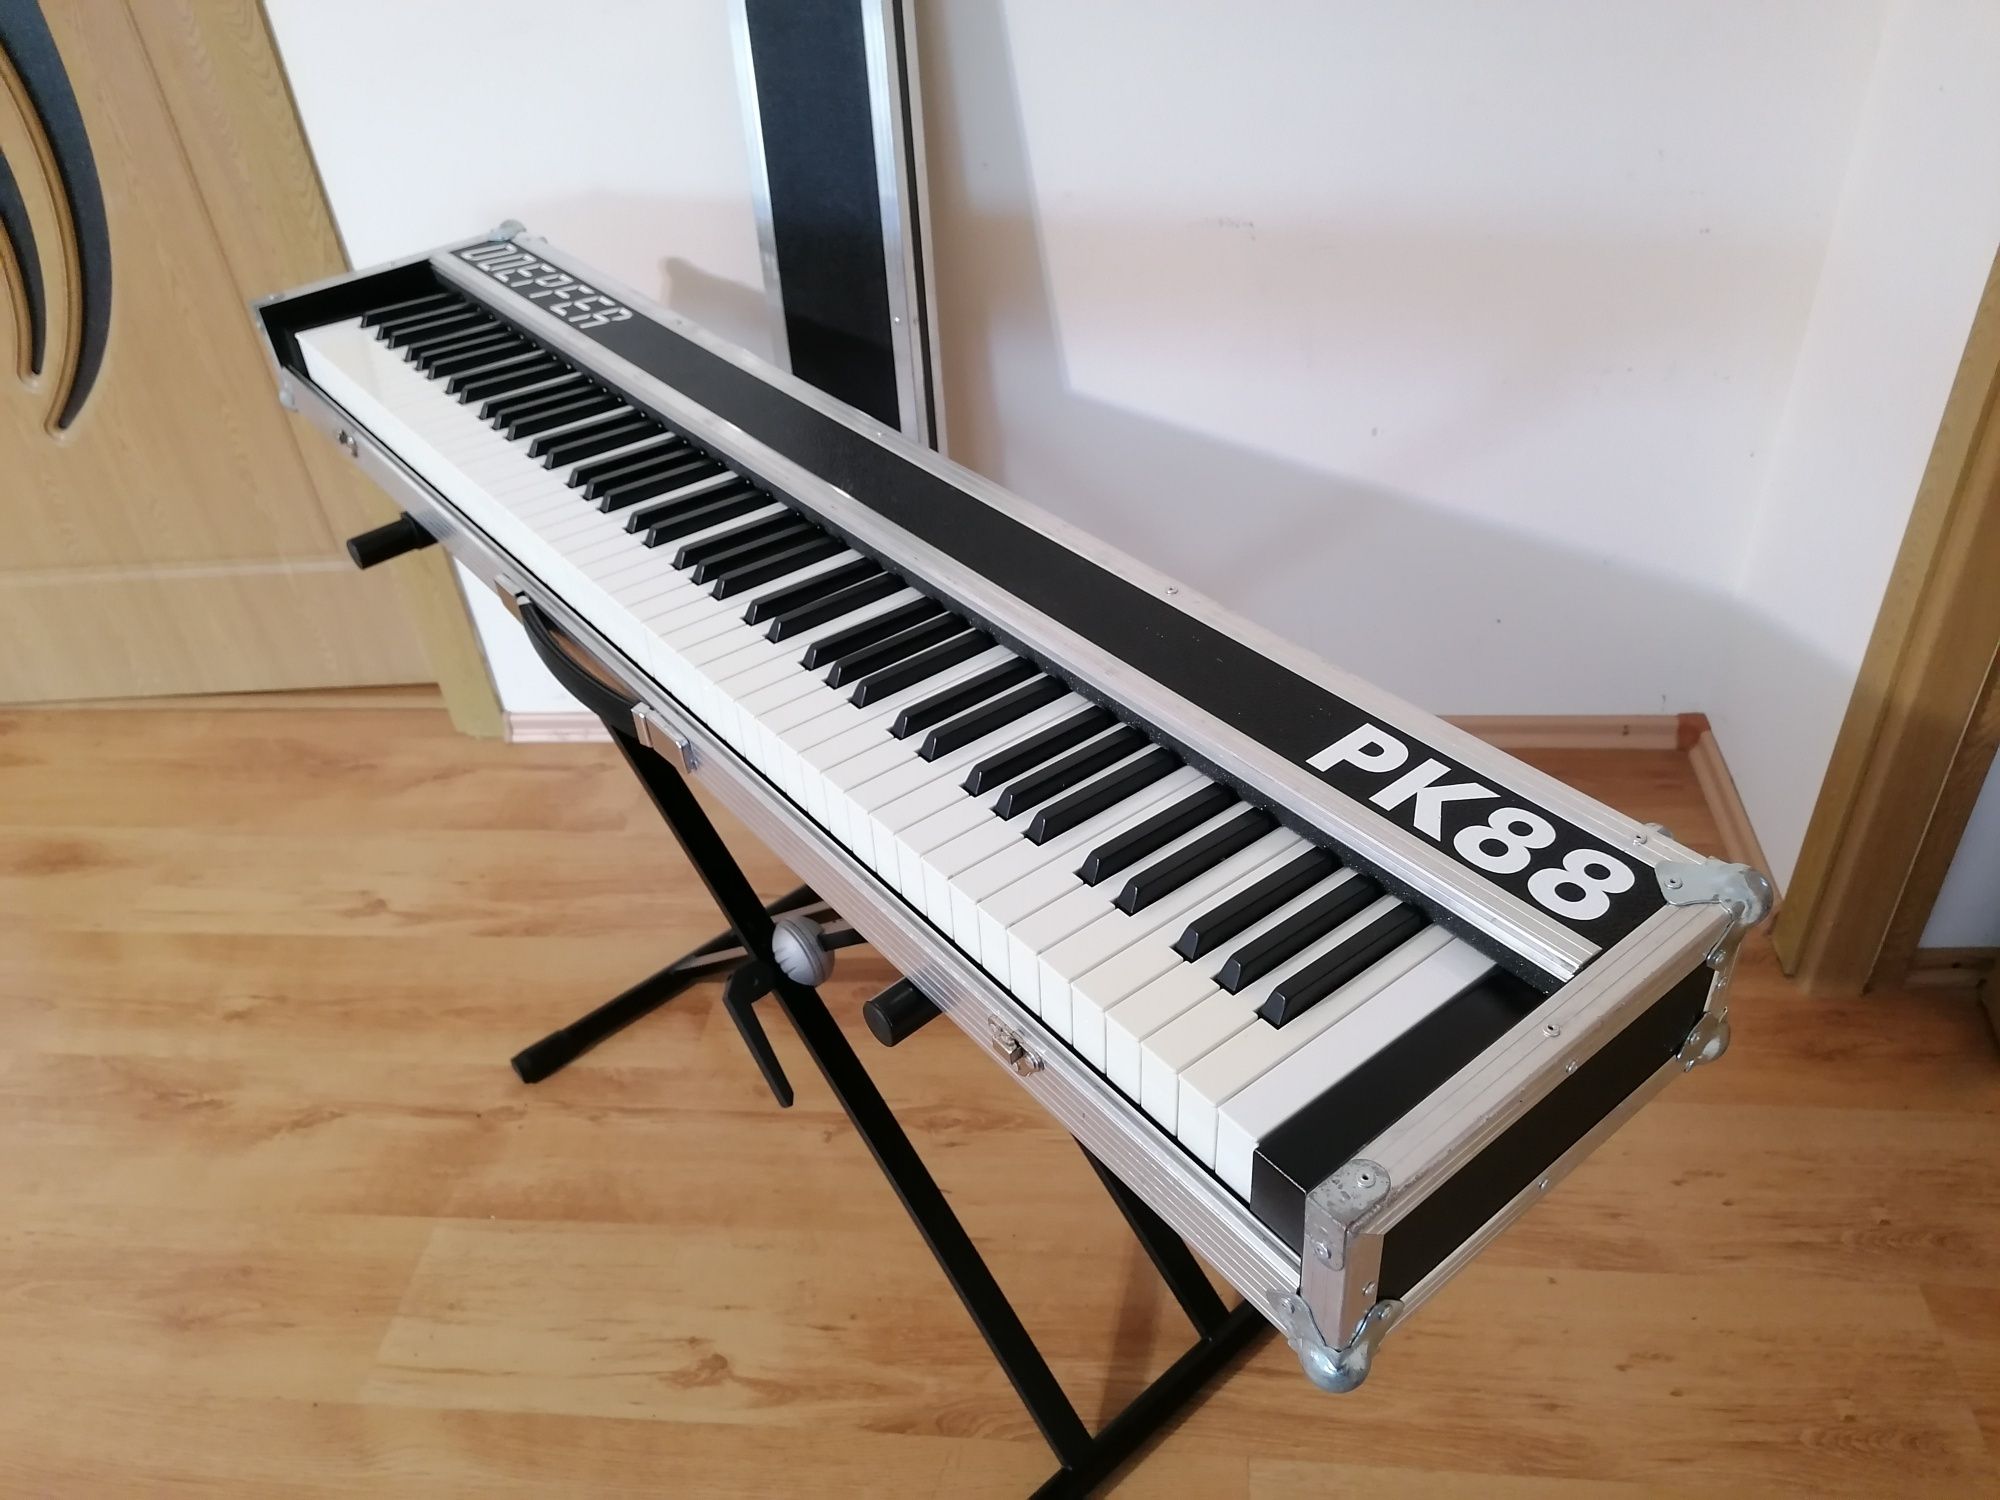 DOEPFER PK-88 profesional midi controller orga pian